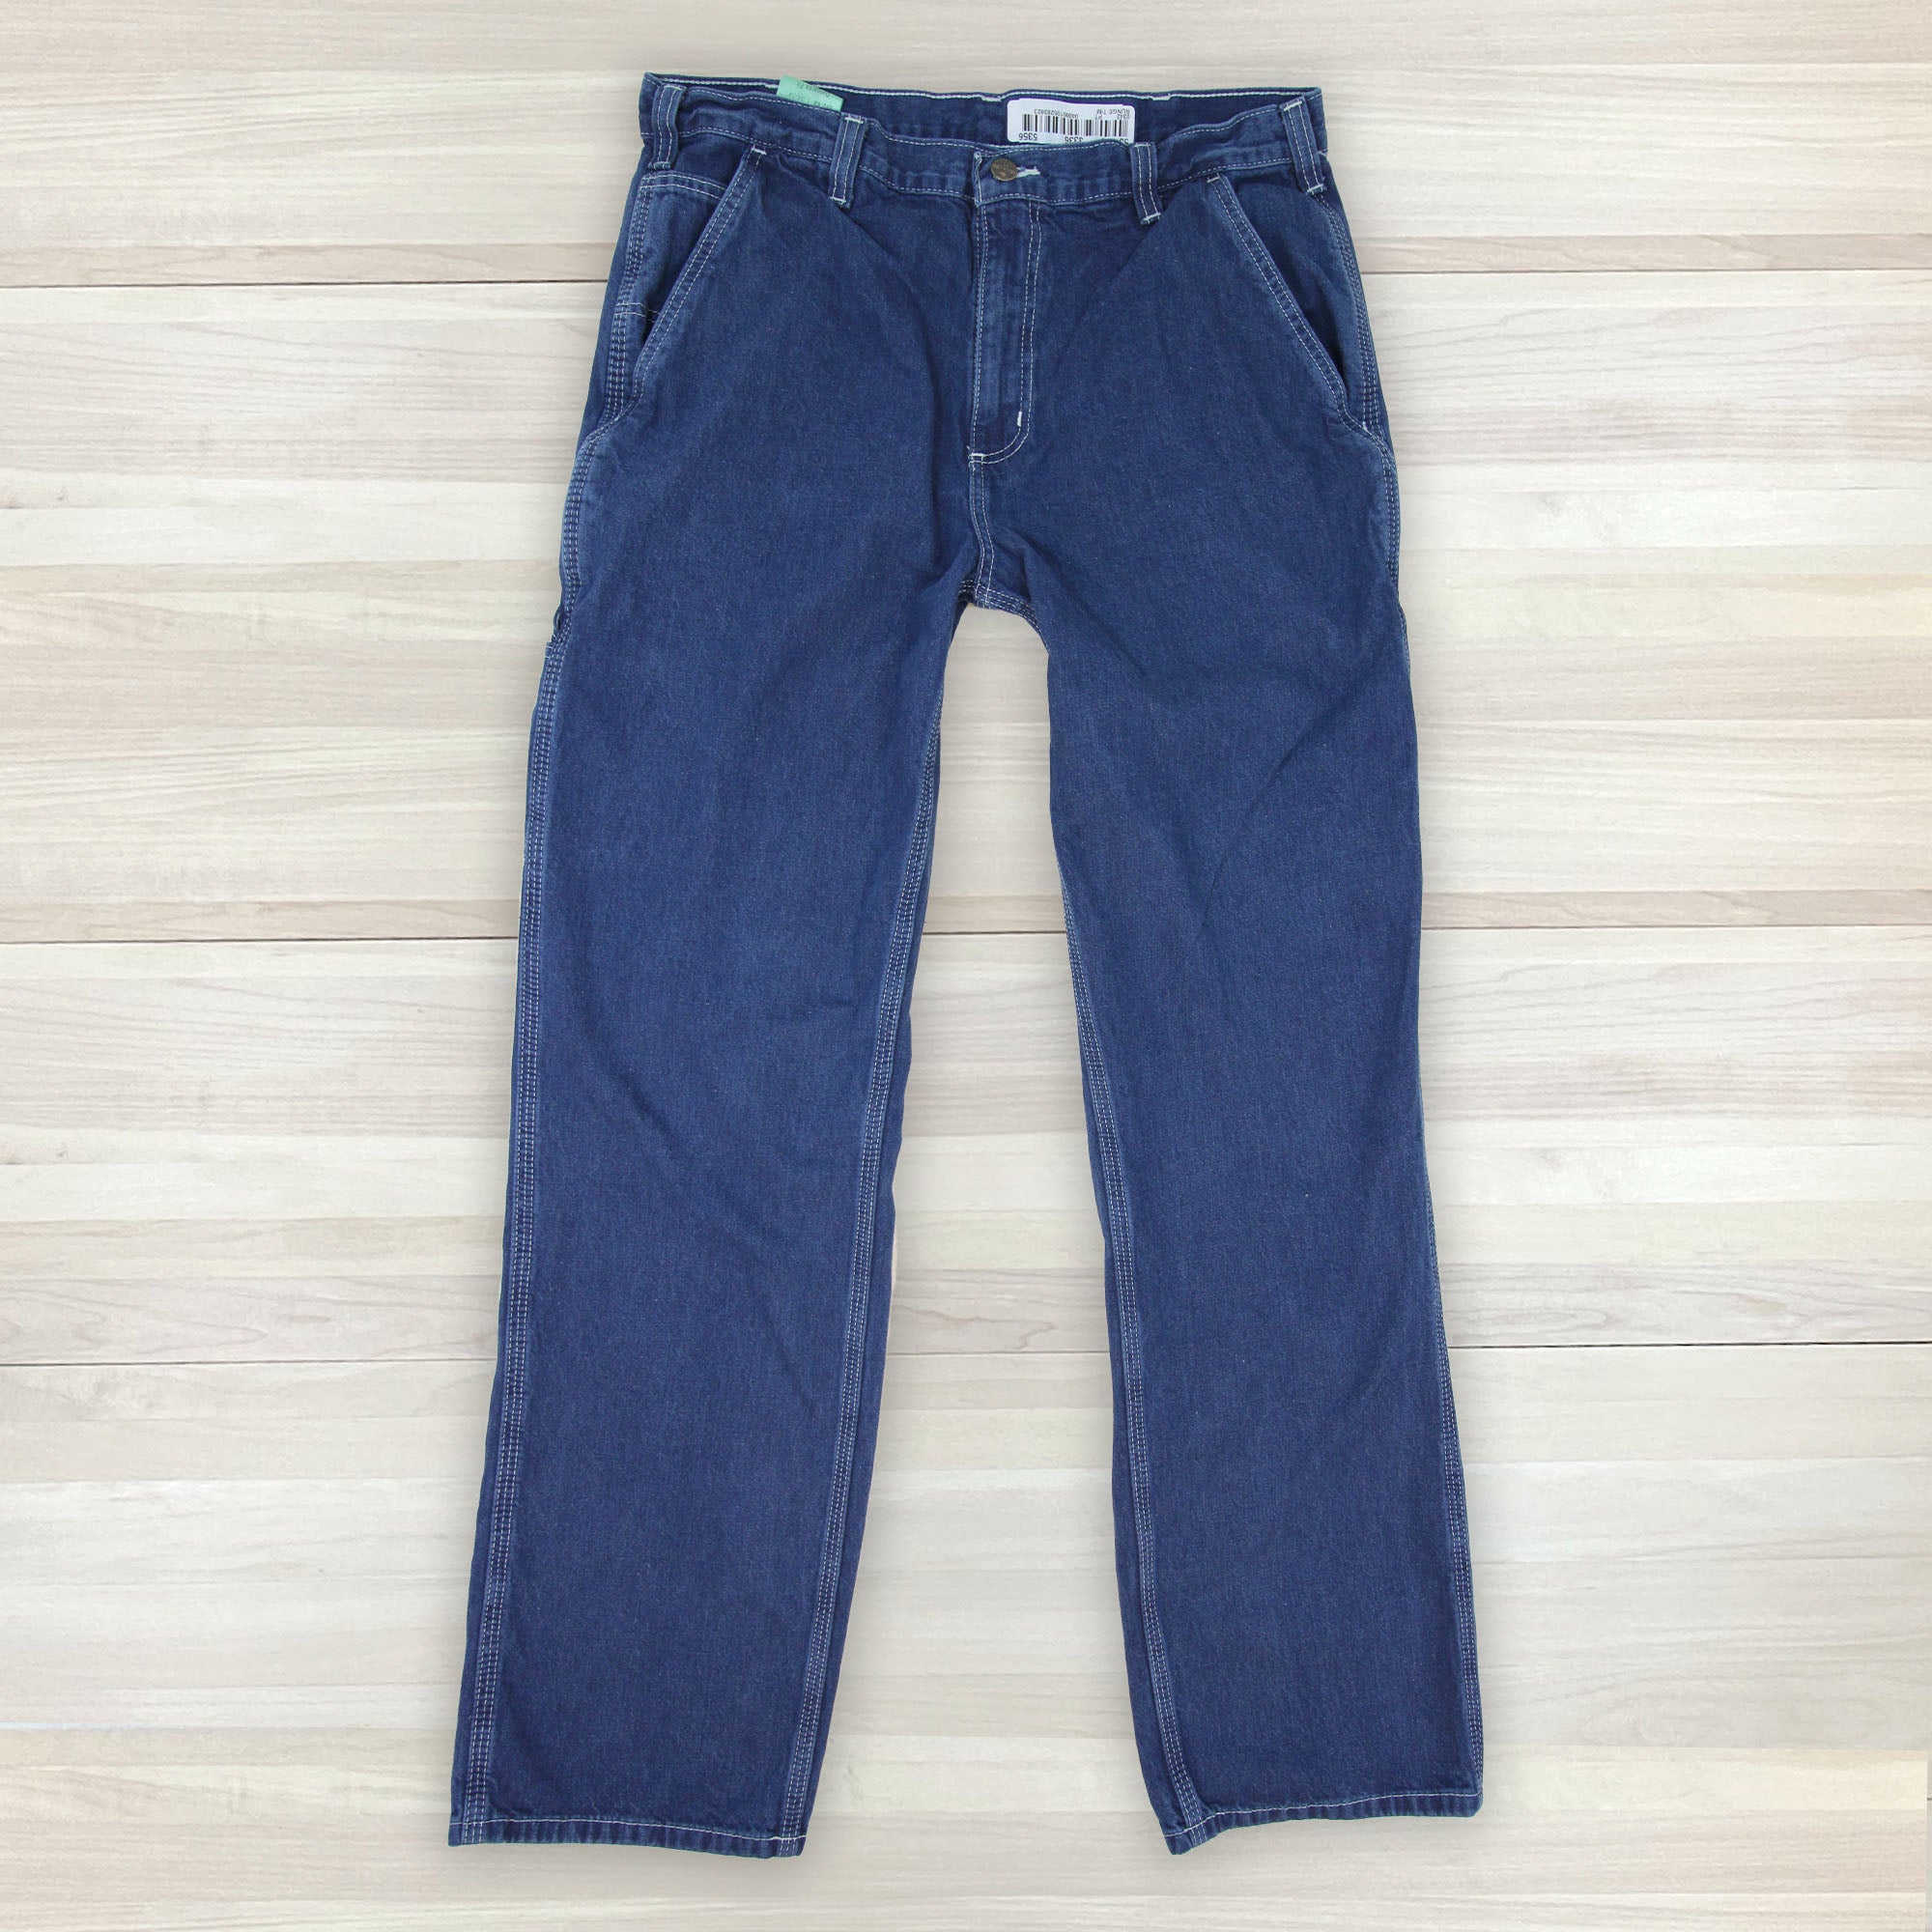 Men's Carhartt Dungaree Fit Carpenter Work Jeans - 34x34